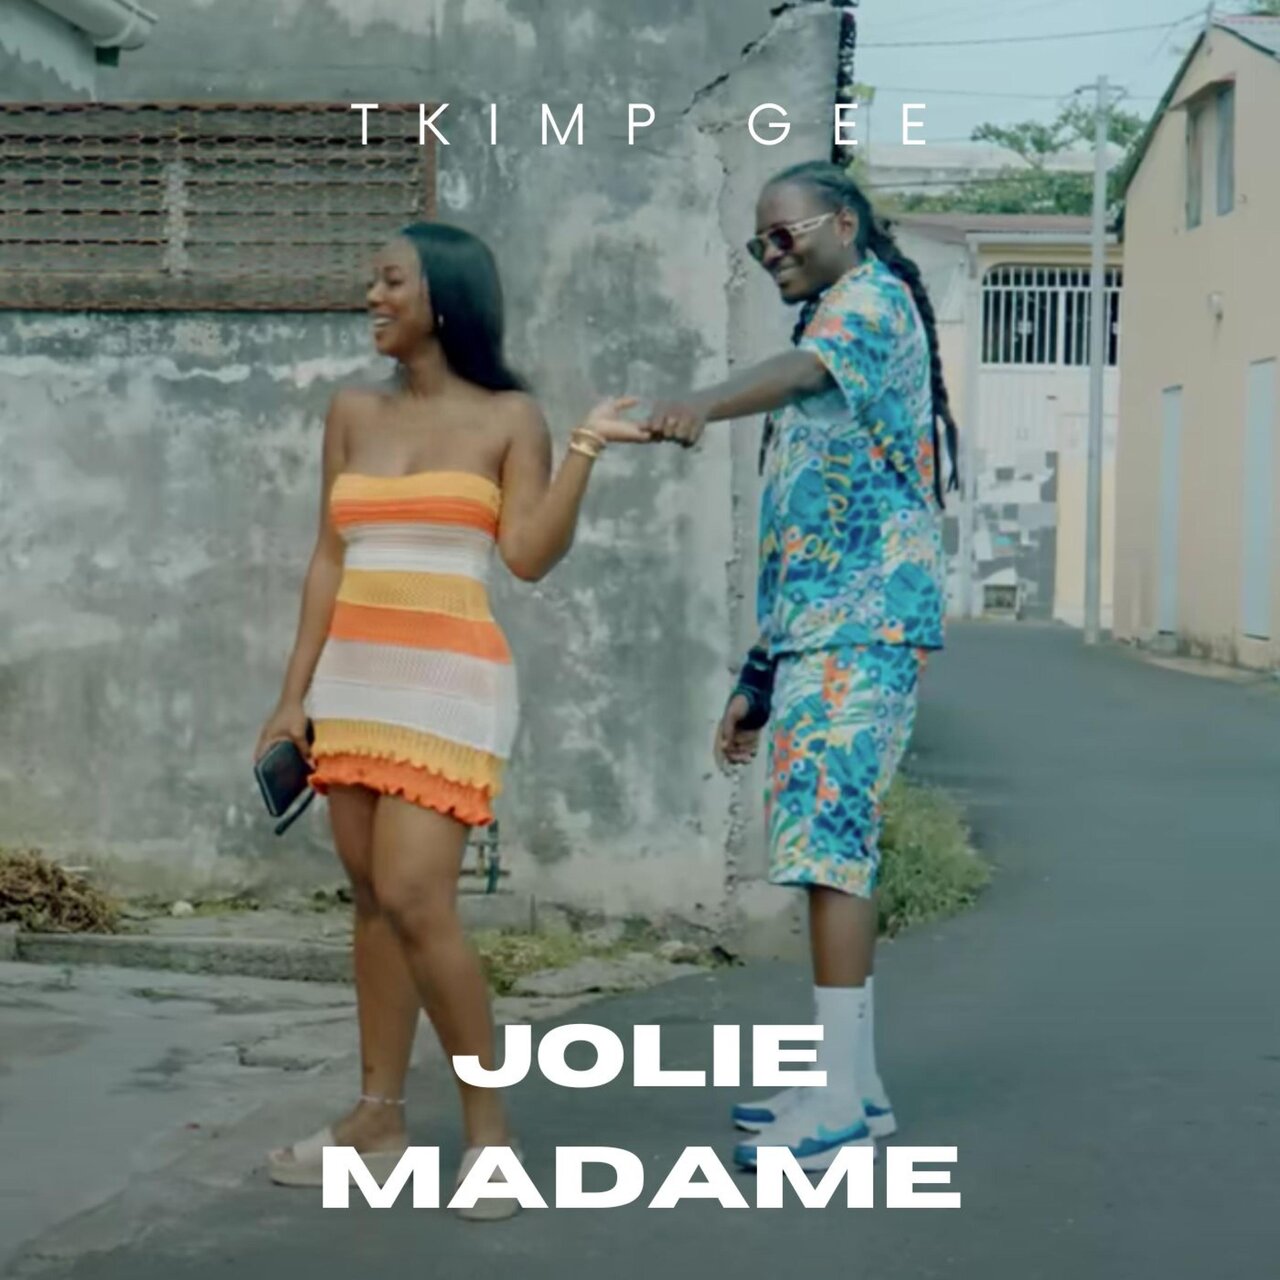 T Kimp Gee - Jolie Madame (Cover)